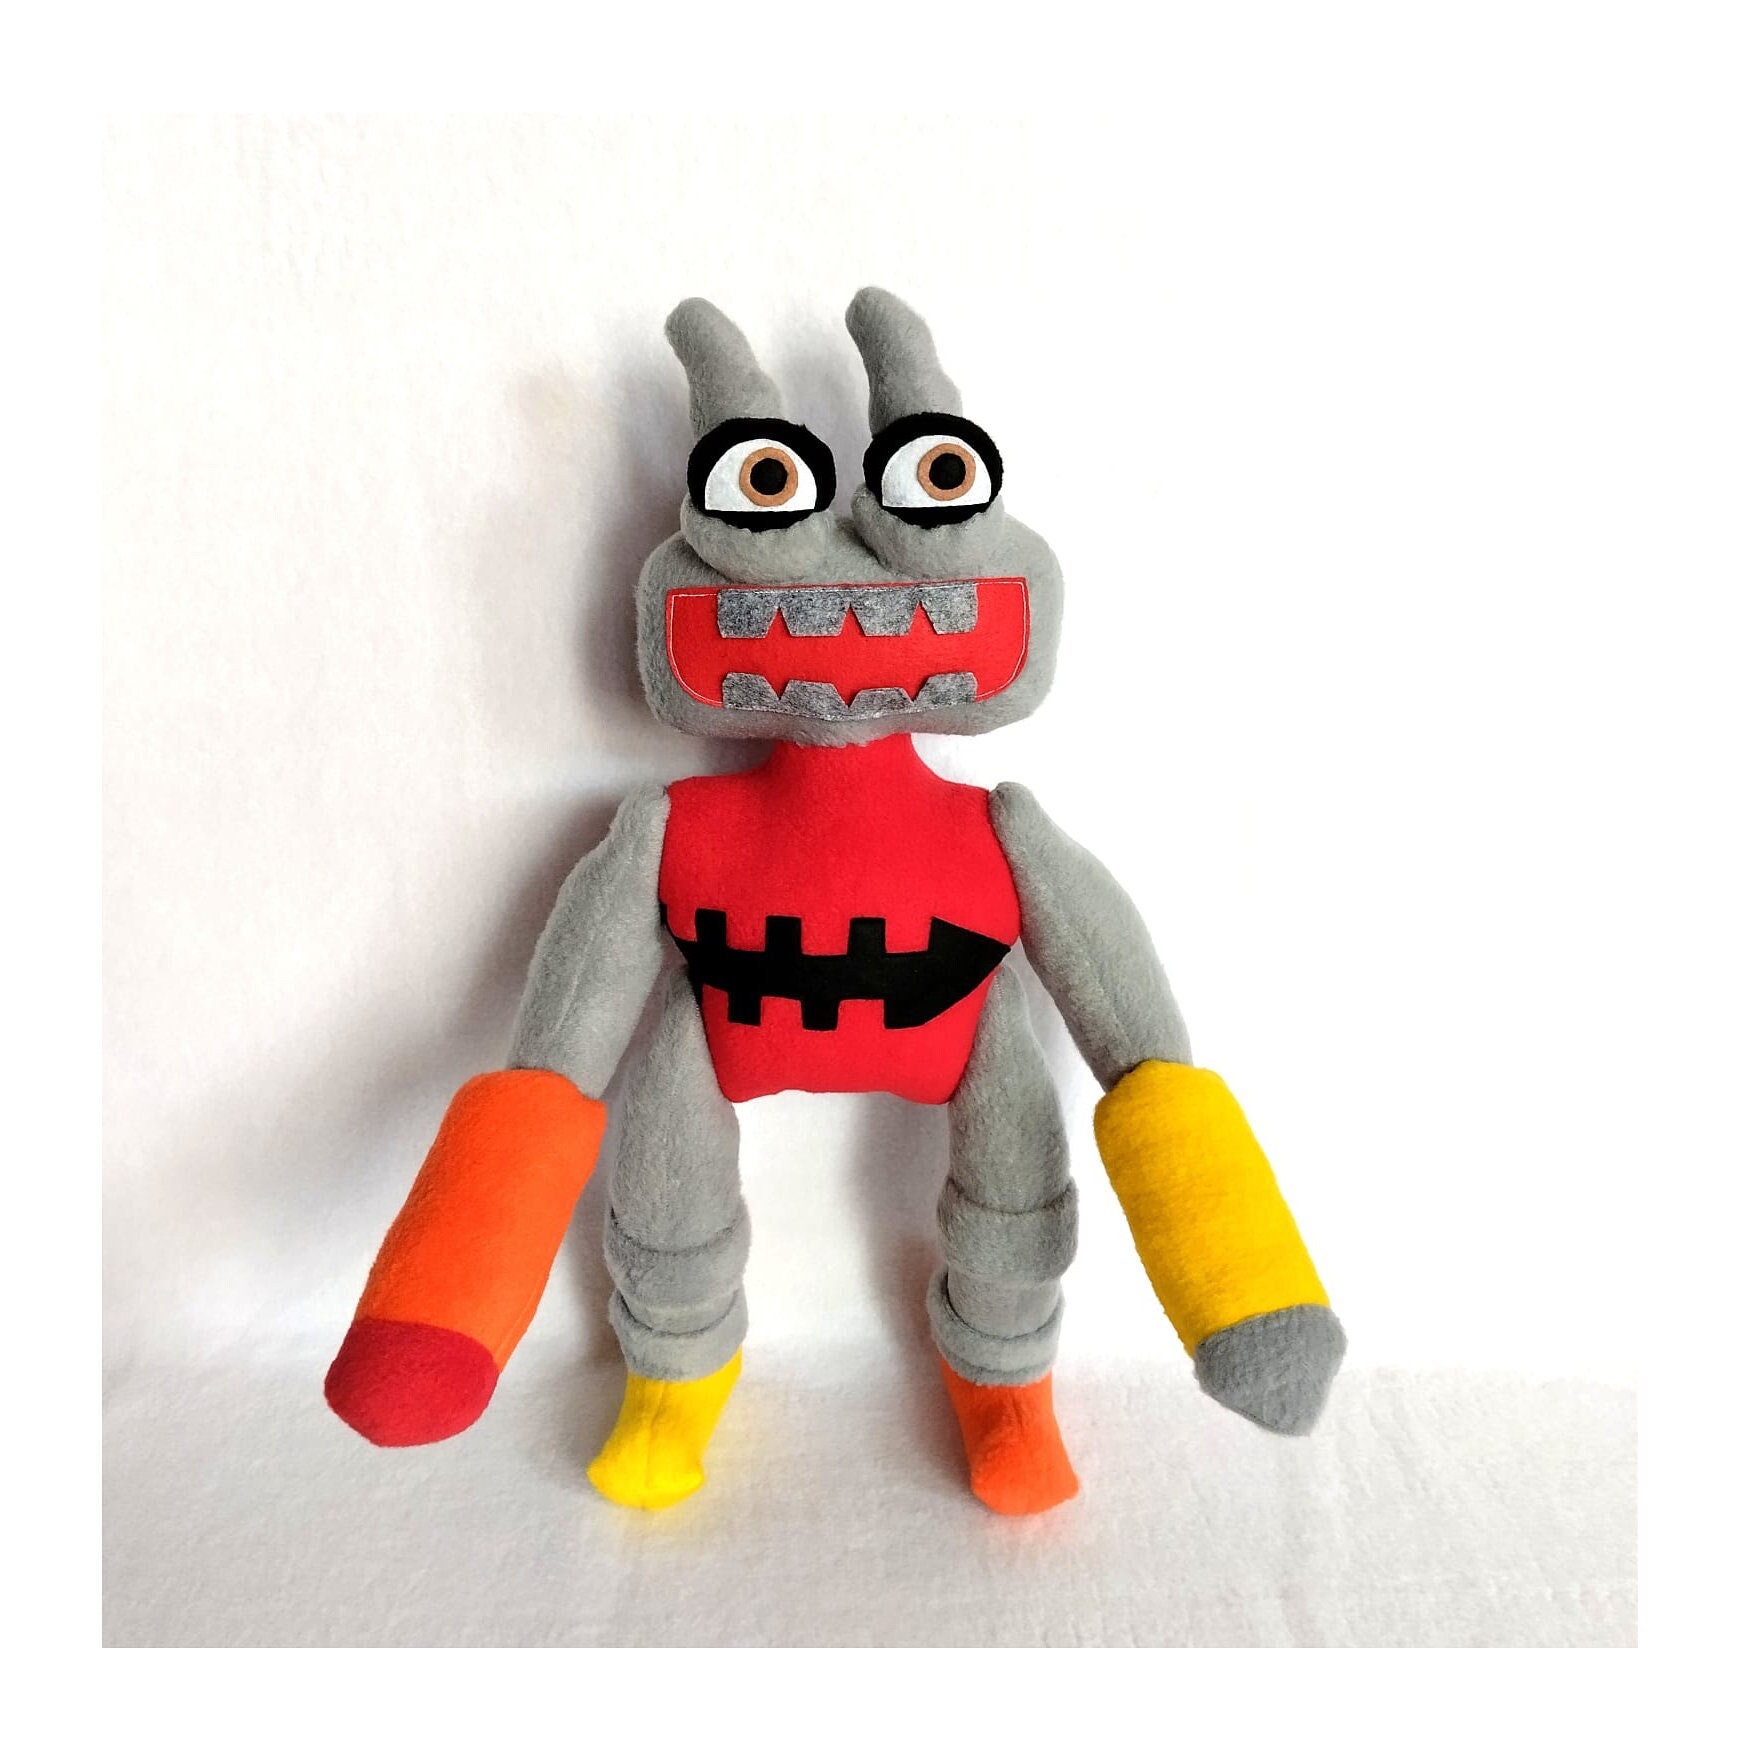 MOC My Singing Monsters Wubbox Mini Version Robots Suit 7-in-1